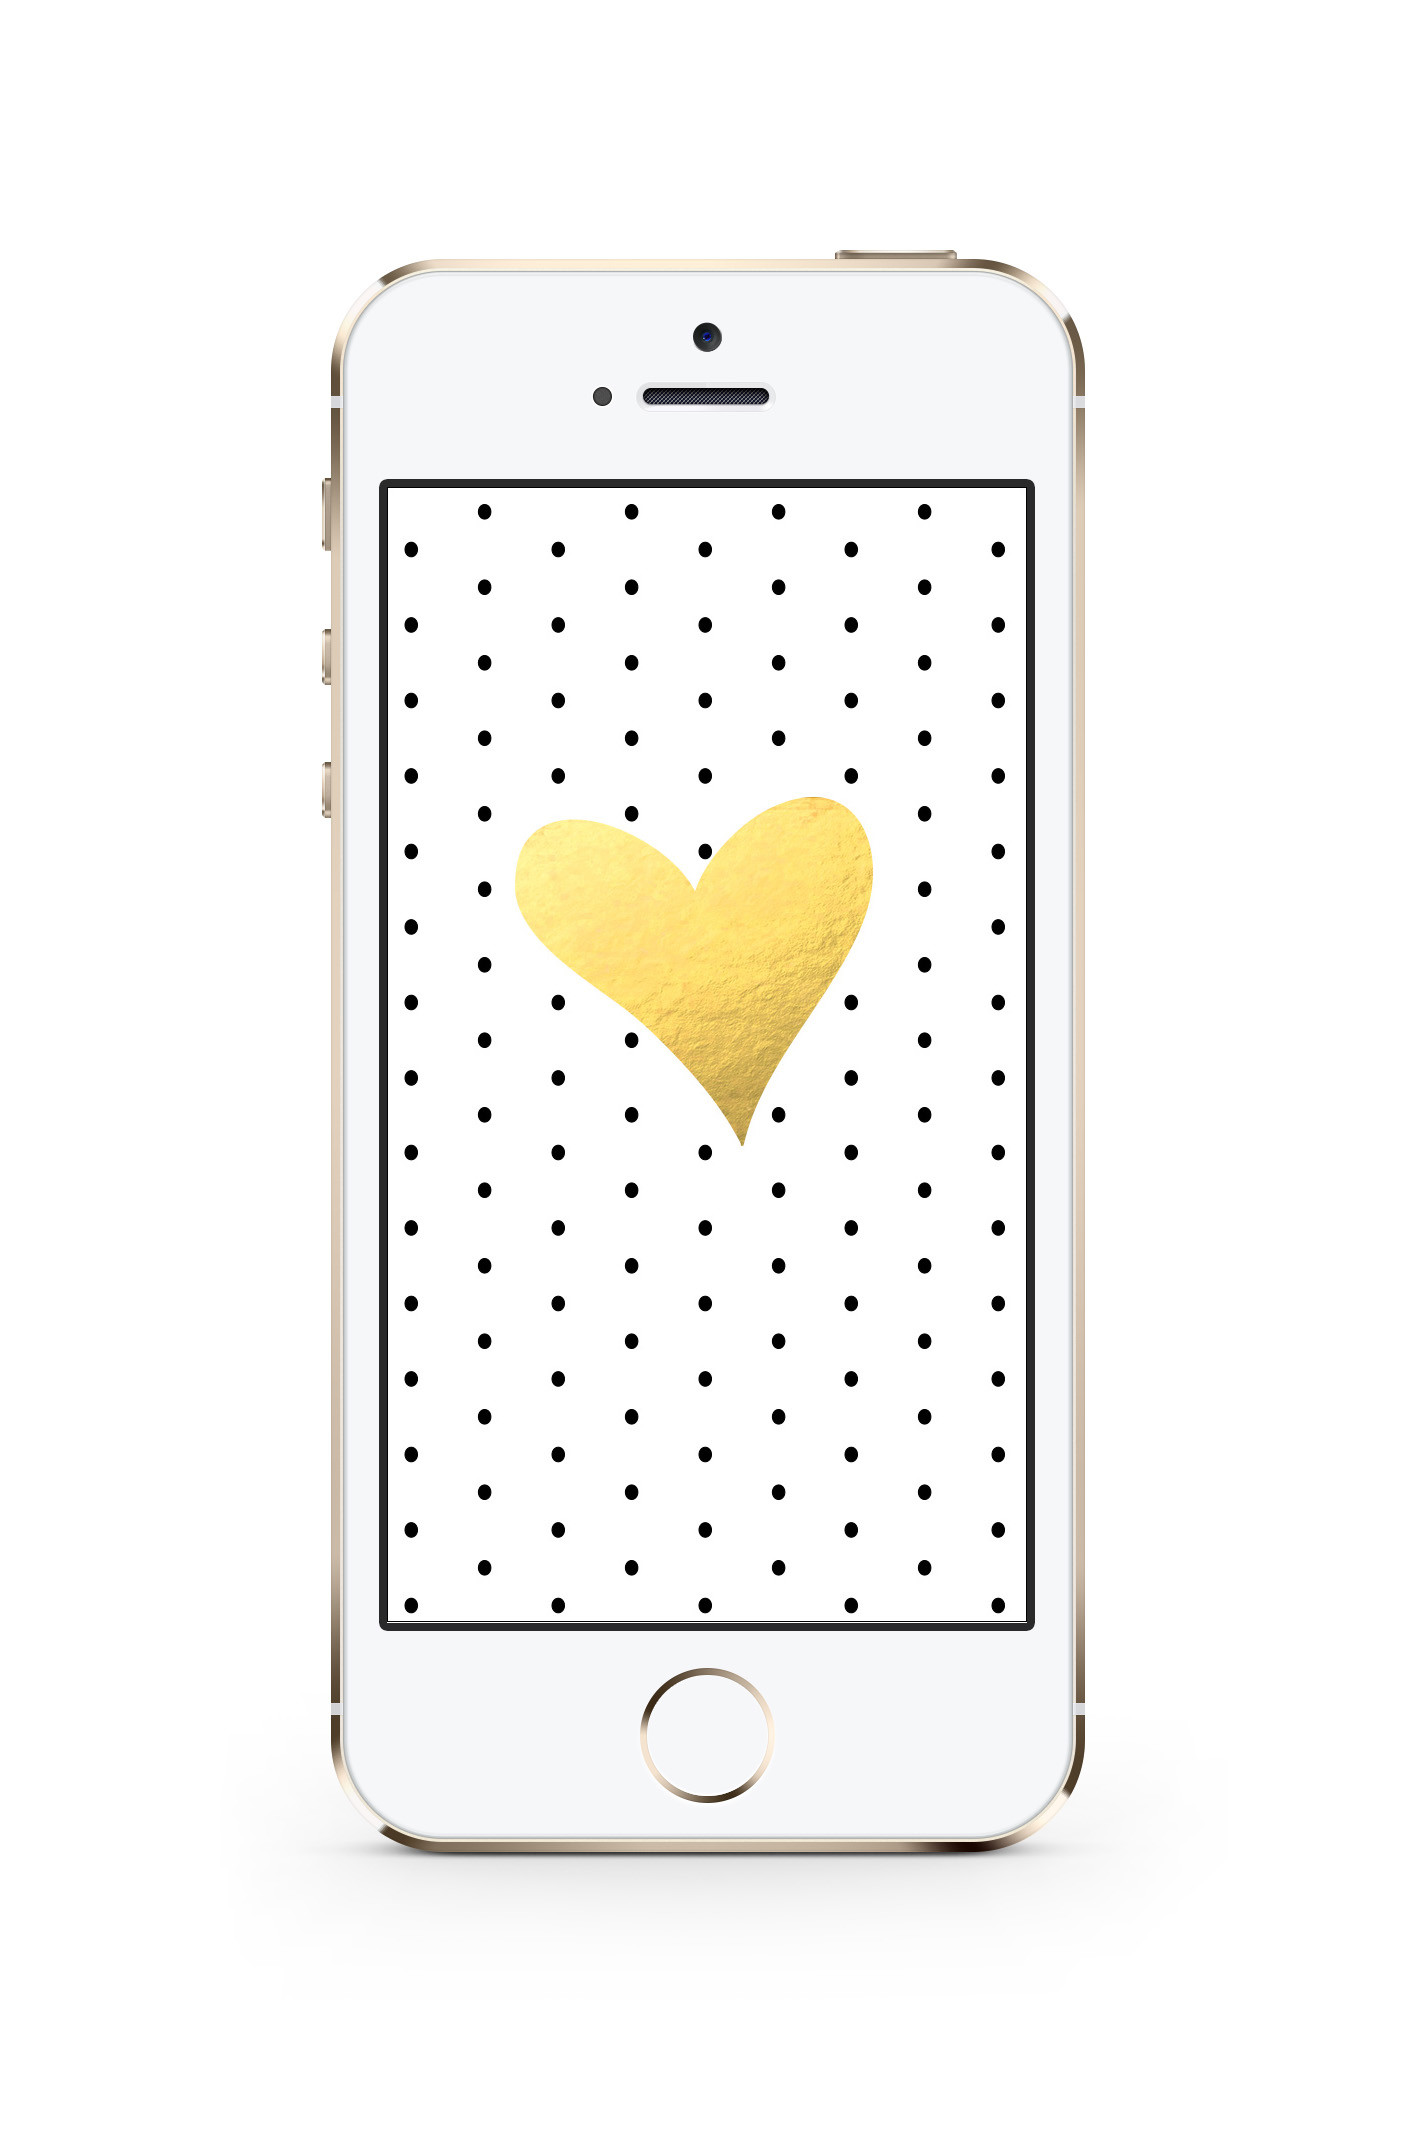 Free iPhone Wallpaper! Black & White Dots + Gold Foil Heart!